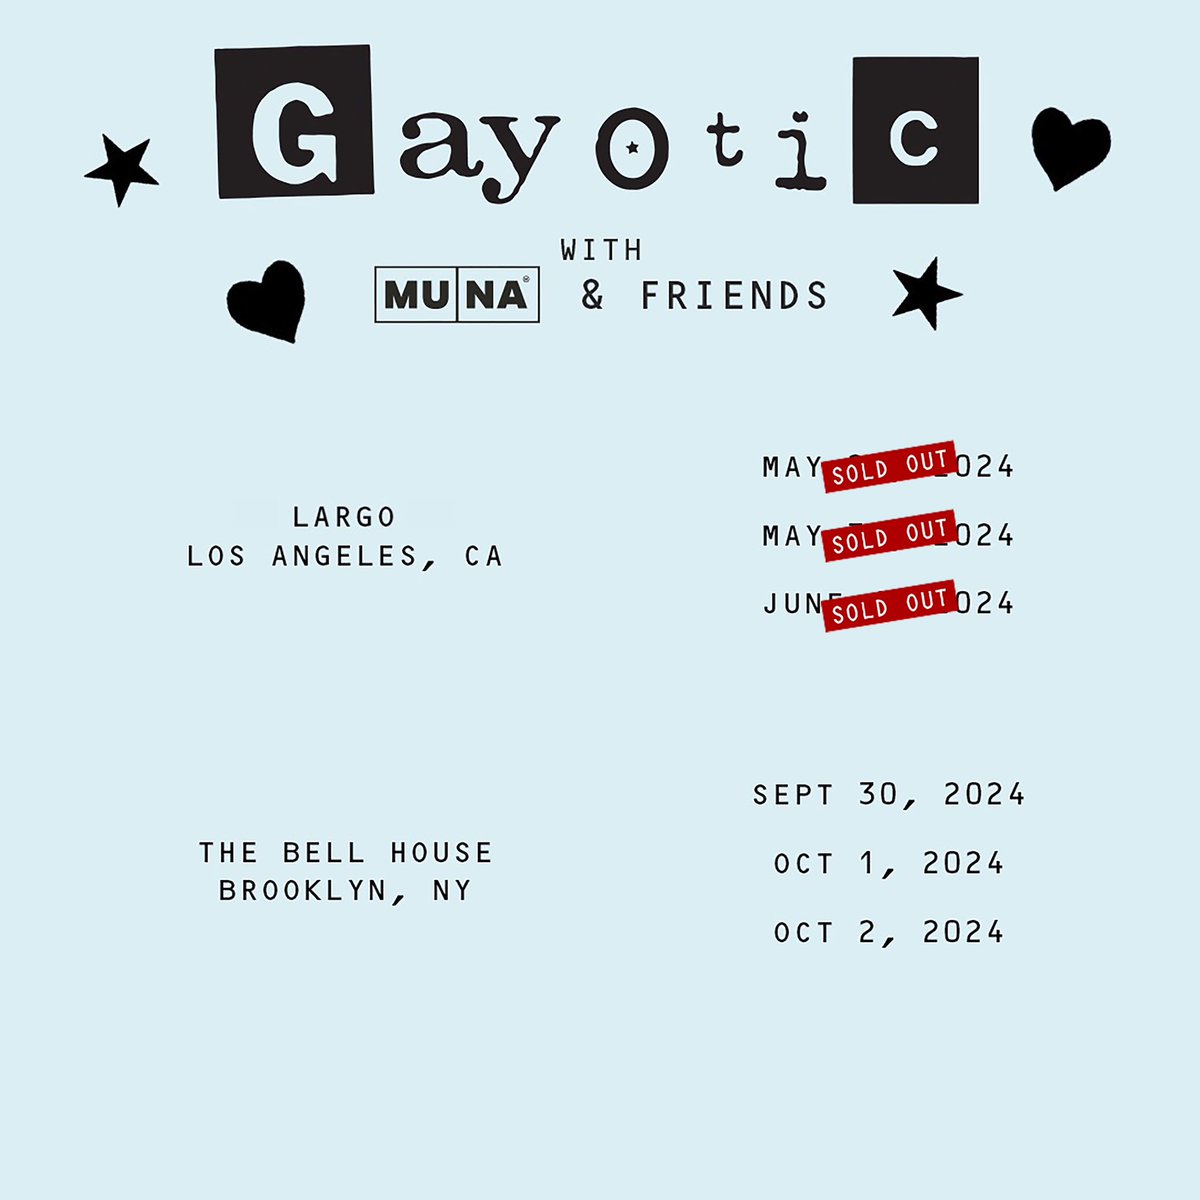 tix on sale now for @BellHouseNY 🗽 eventbrite.com/cc/gayotic-wit…